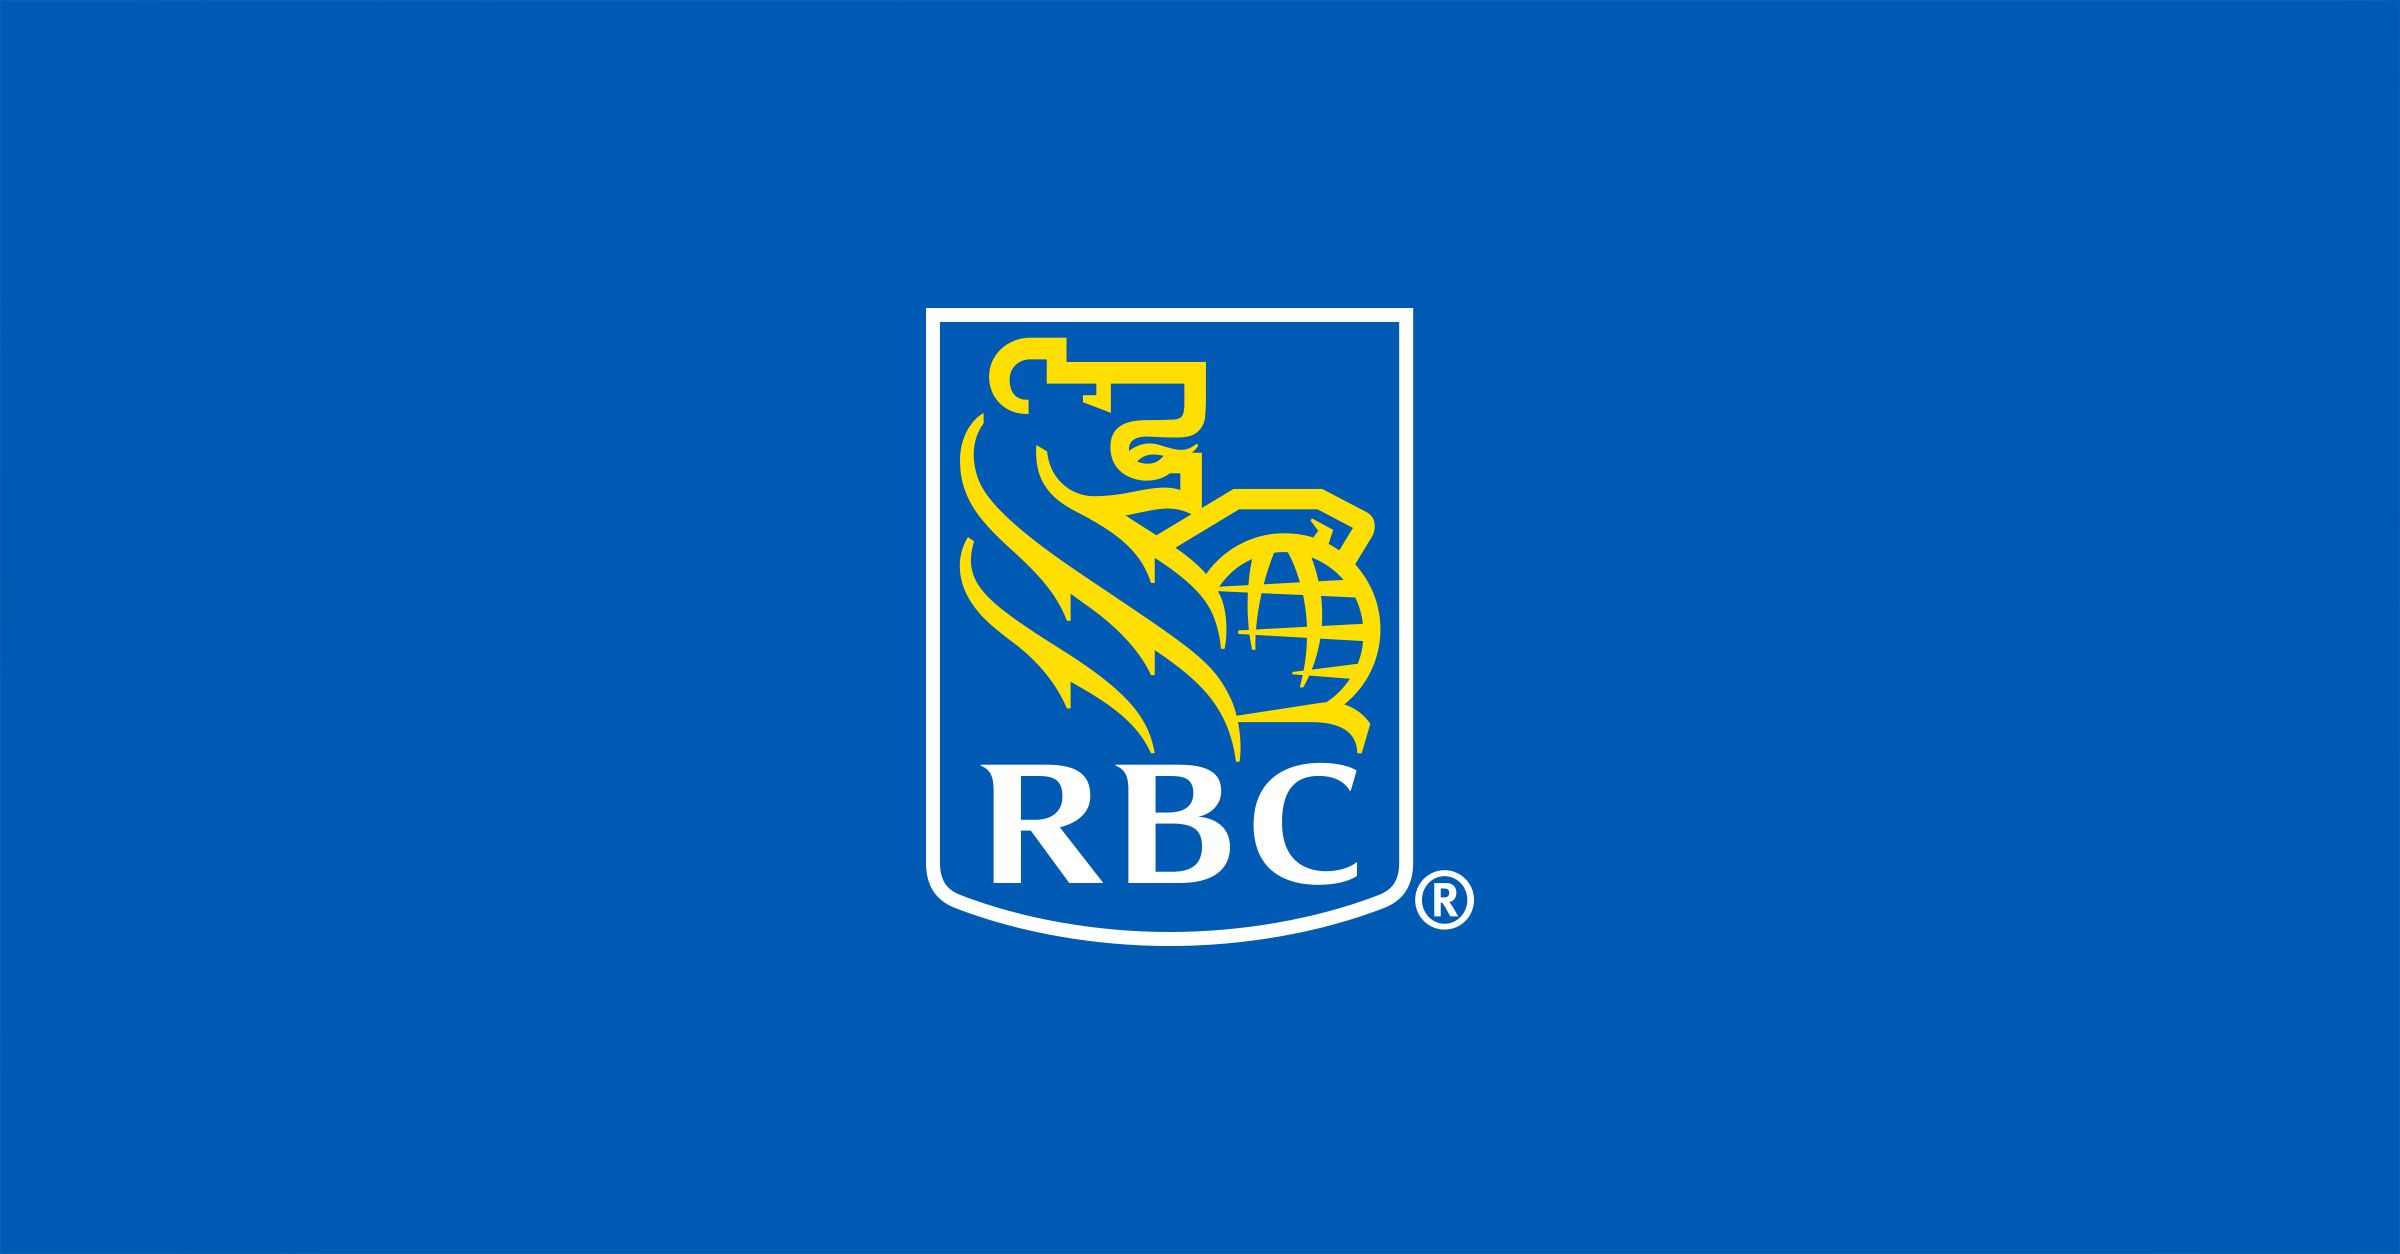 Rbc Logos Wallpapers